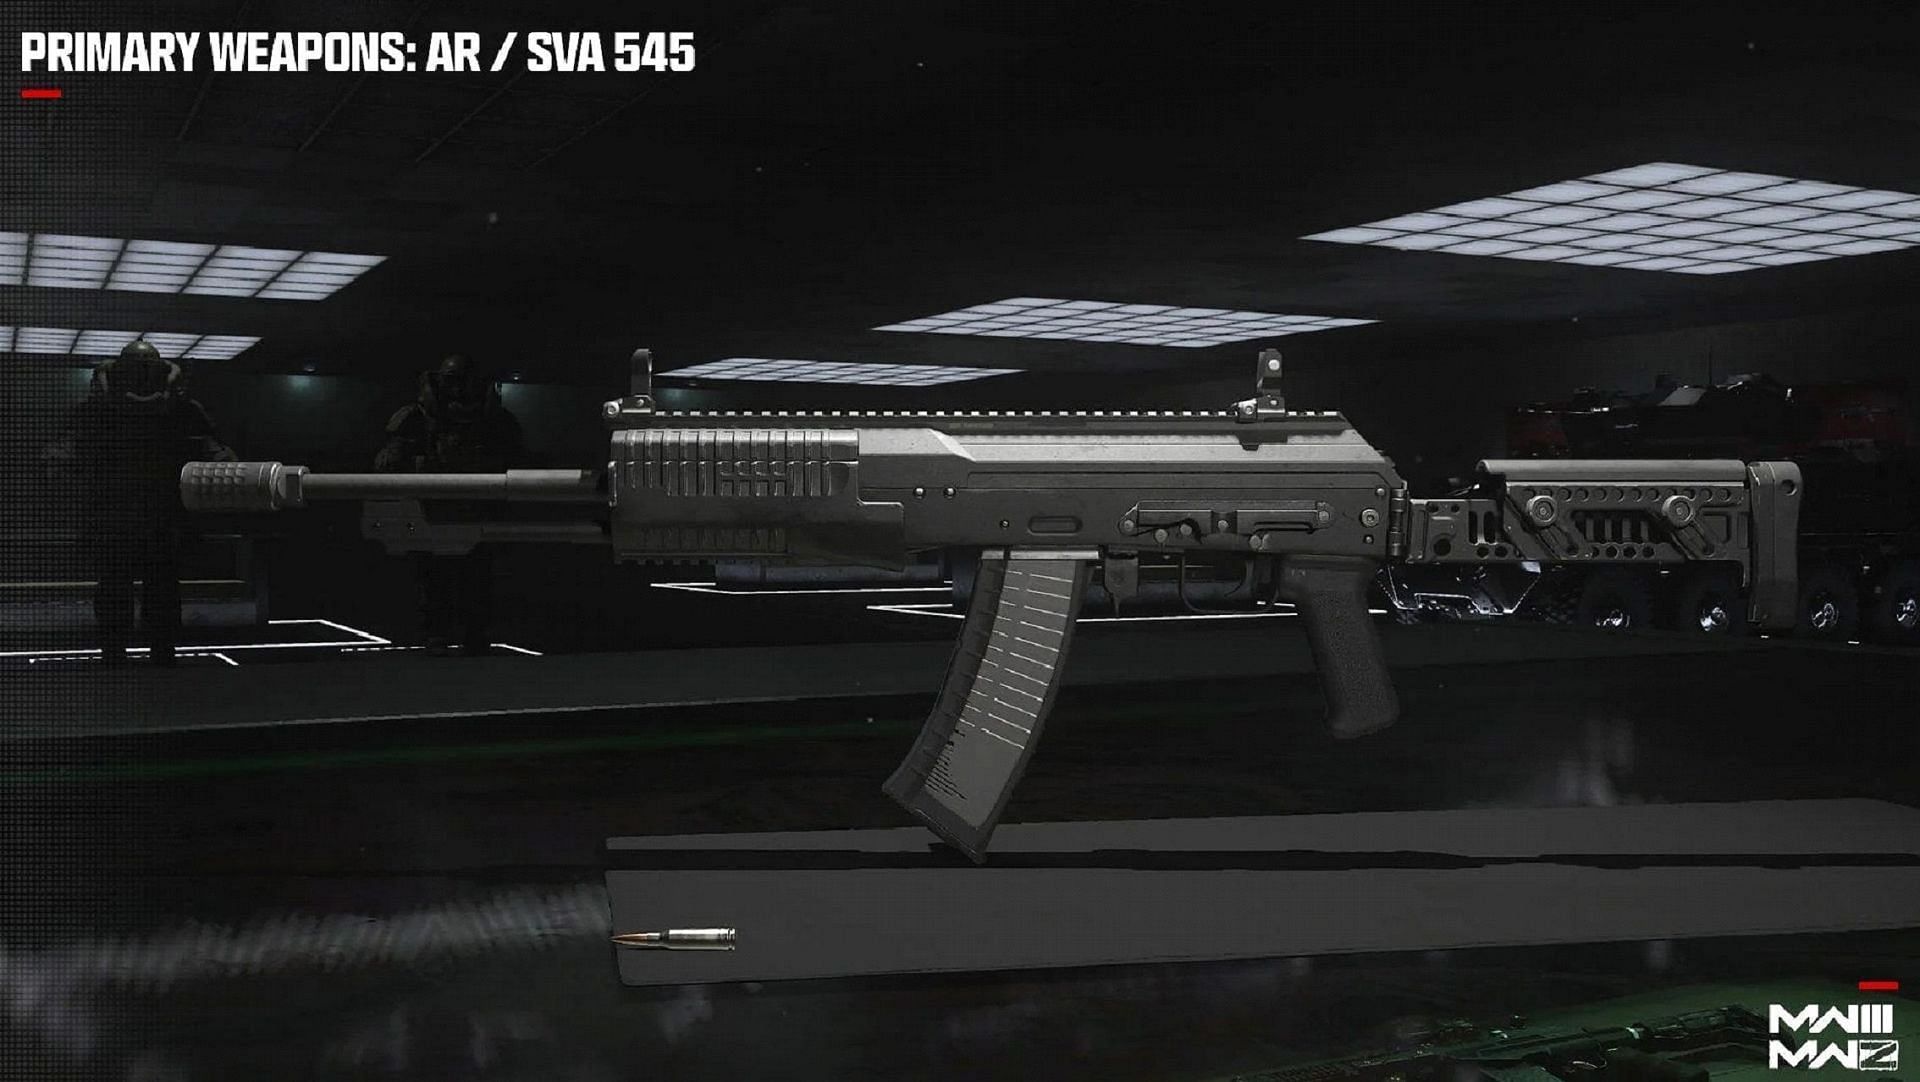 SVA-545 of Modern Warfare 3 (image via Activision)